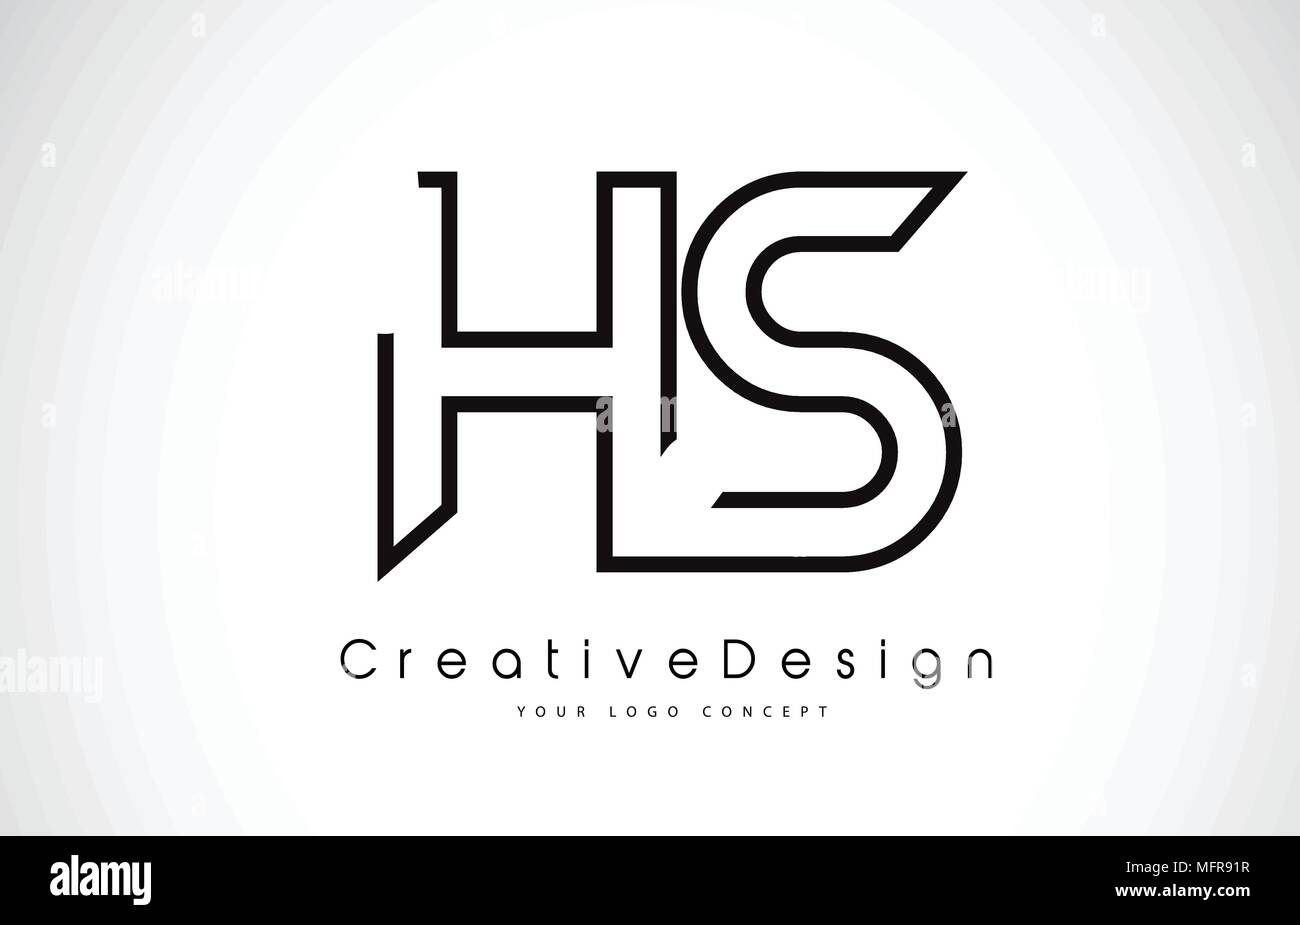 HS H S Letter Logo Design in Black Colors. Creative Modern Letters Vector Icon Logo Illustration. Stock Vector